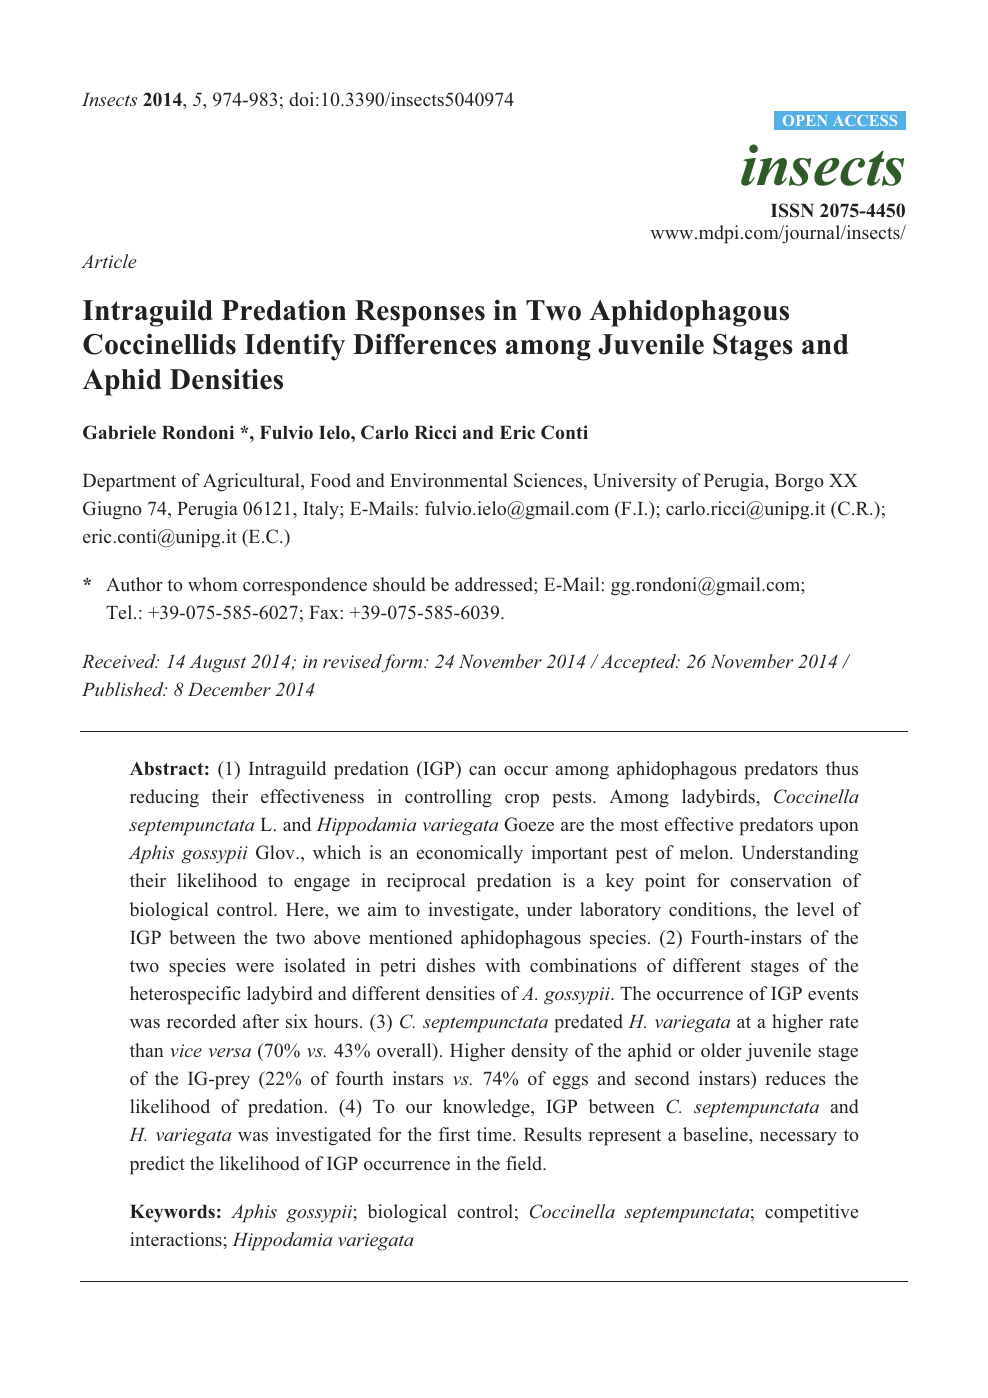 Intraguild Predation Responses In Two Aphidophagous Coccinellids